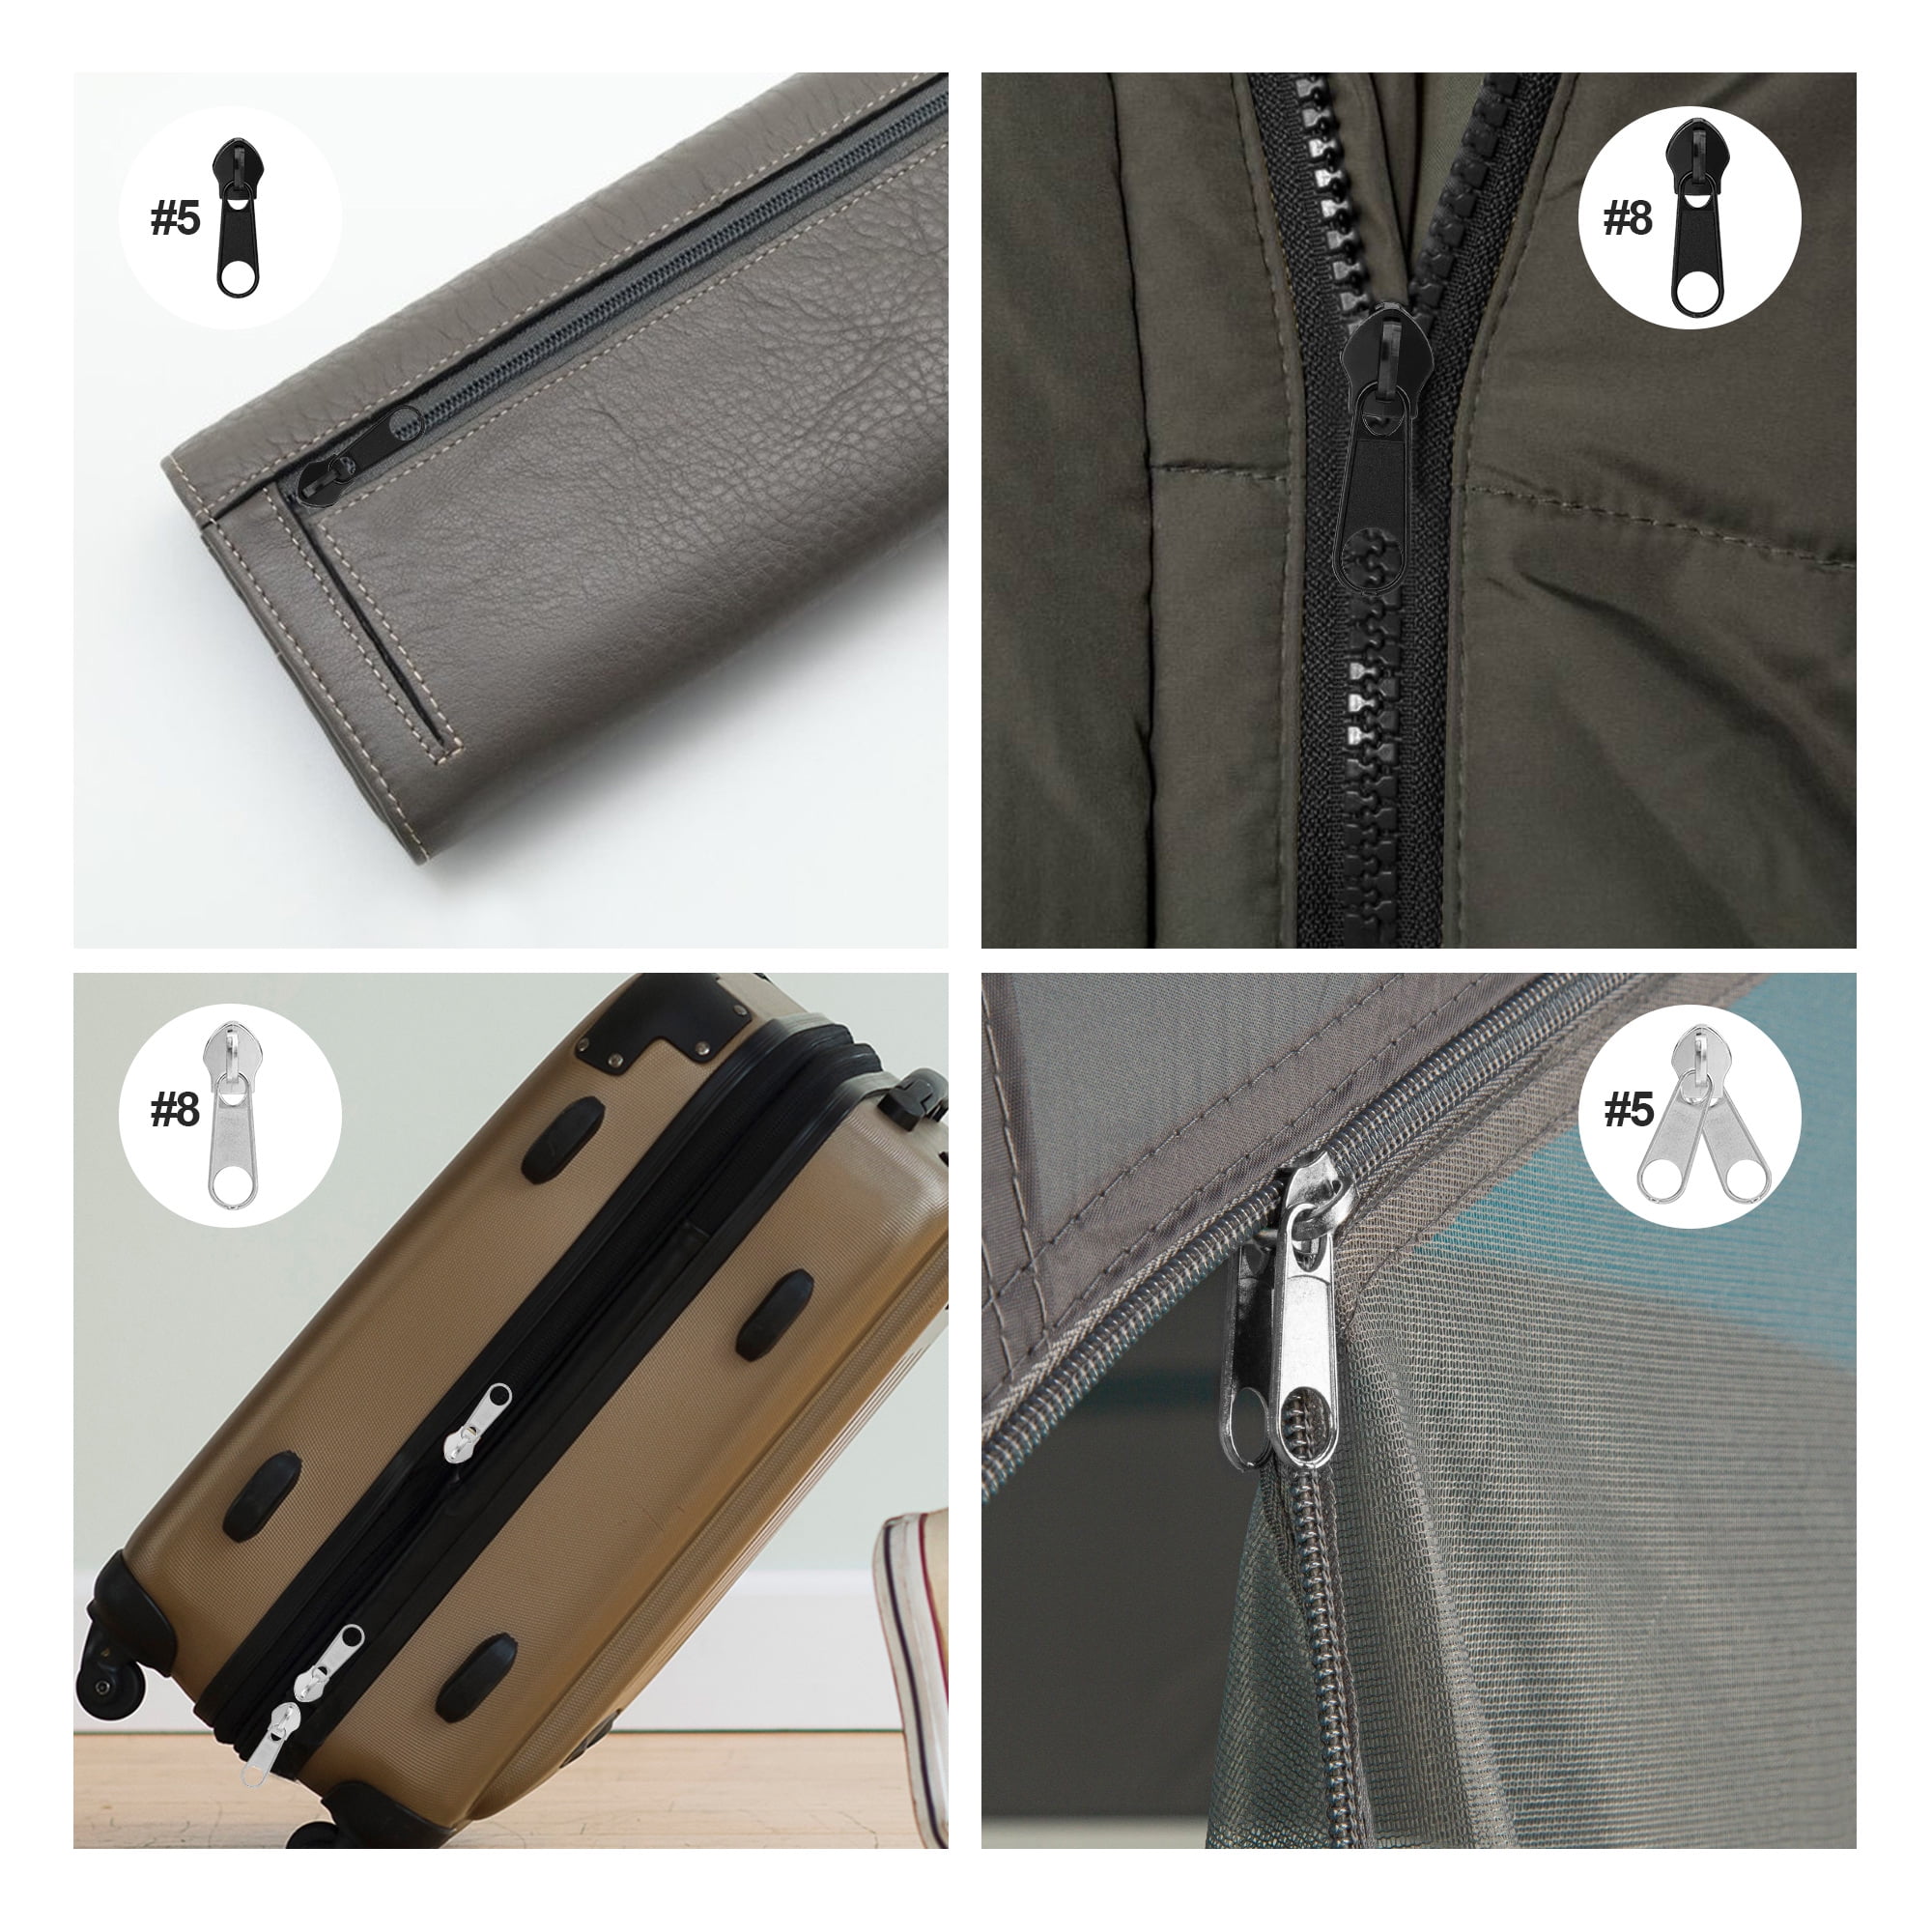 Shop 18pcs Zipper Slider Replacement Kit Zipper Repair Kit for